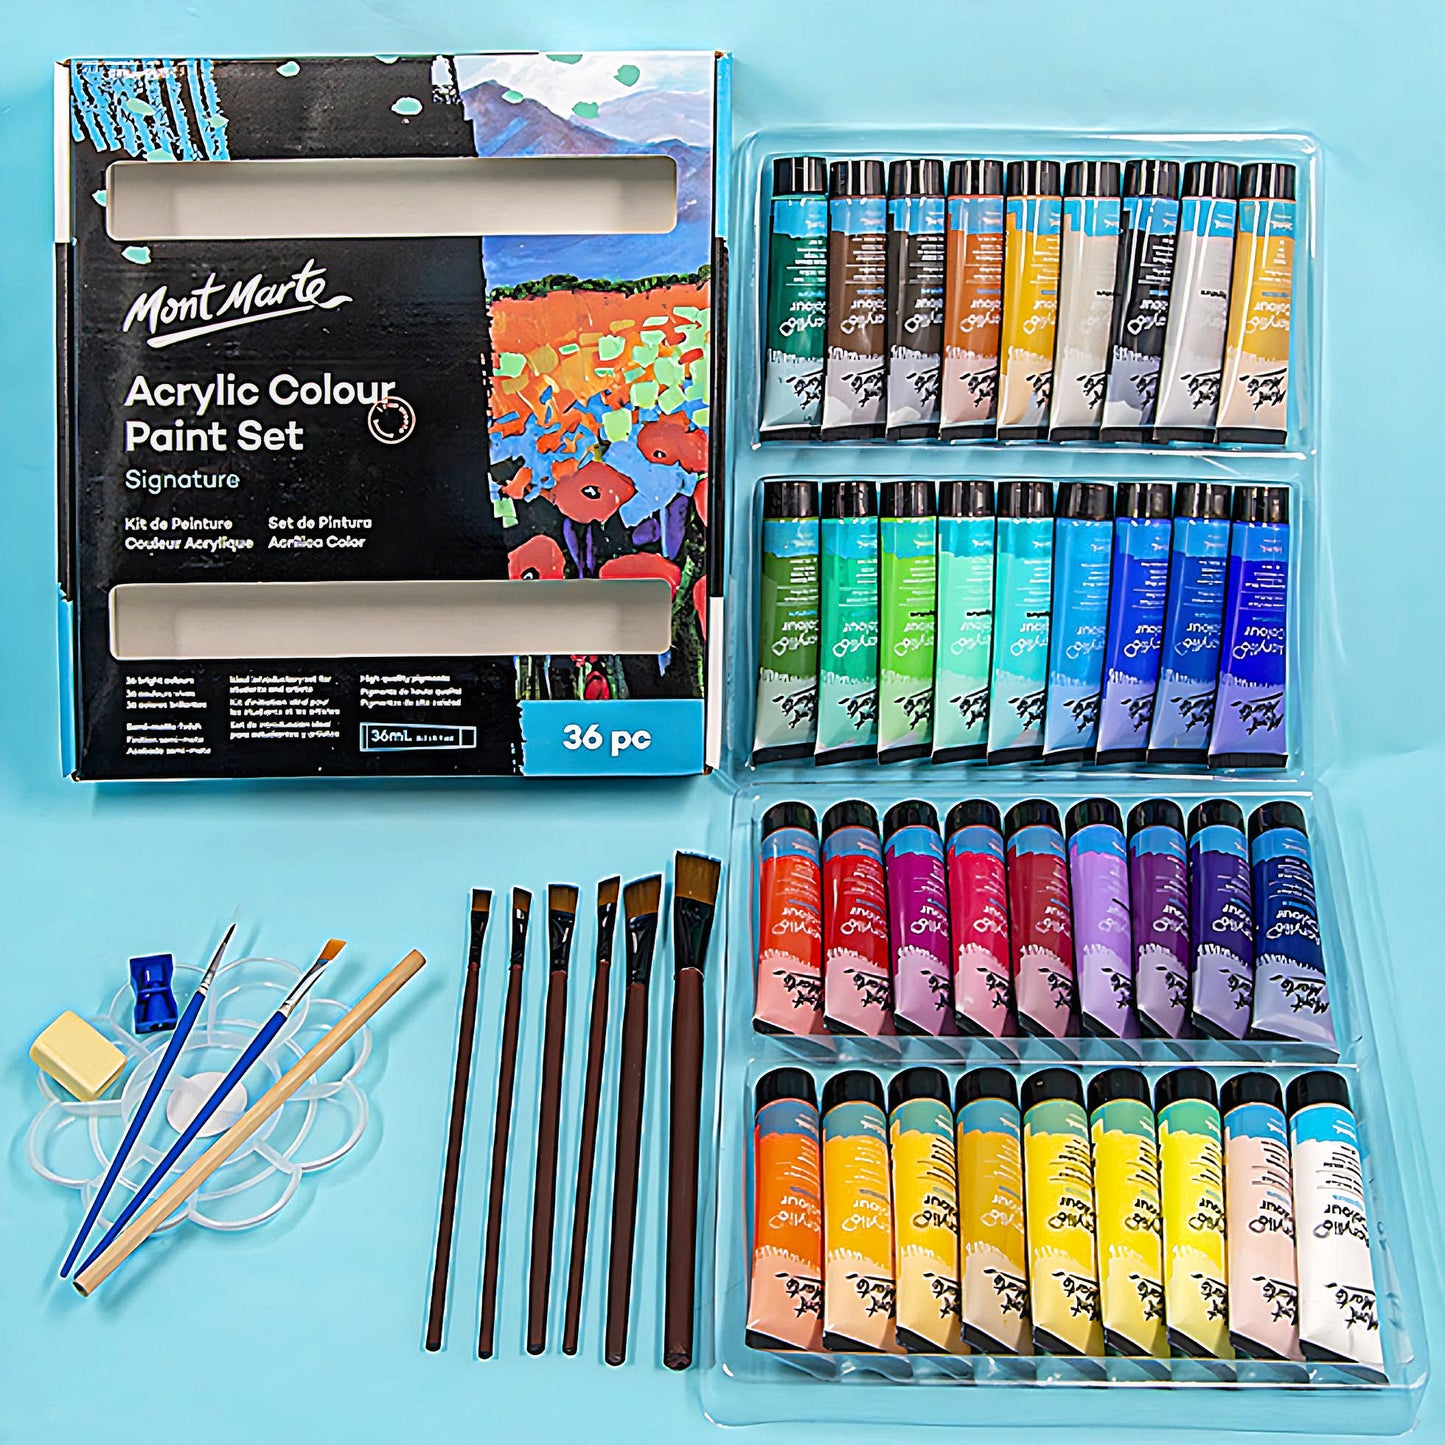 a Mont Marte acrylic paint 36 colors set with 8 paintbrushes, 1 pencil sharpener, 1pencil, 1 eraser, and 1 palette